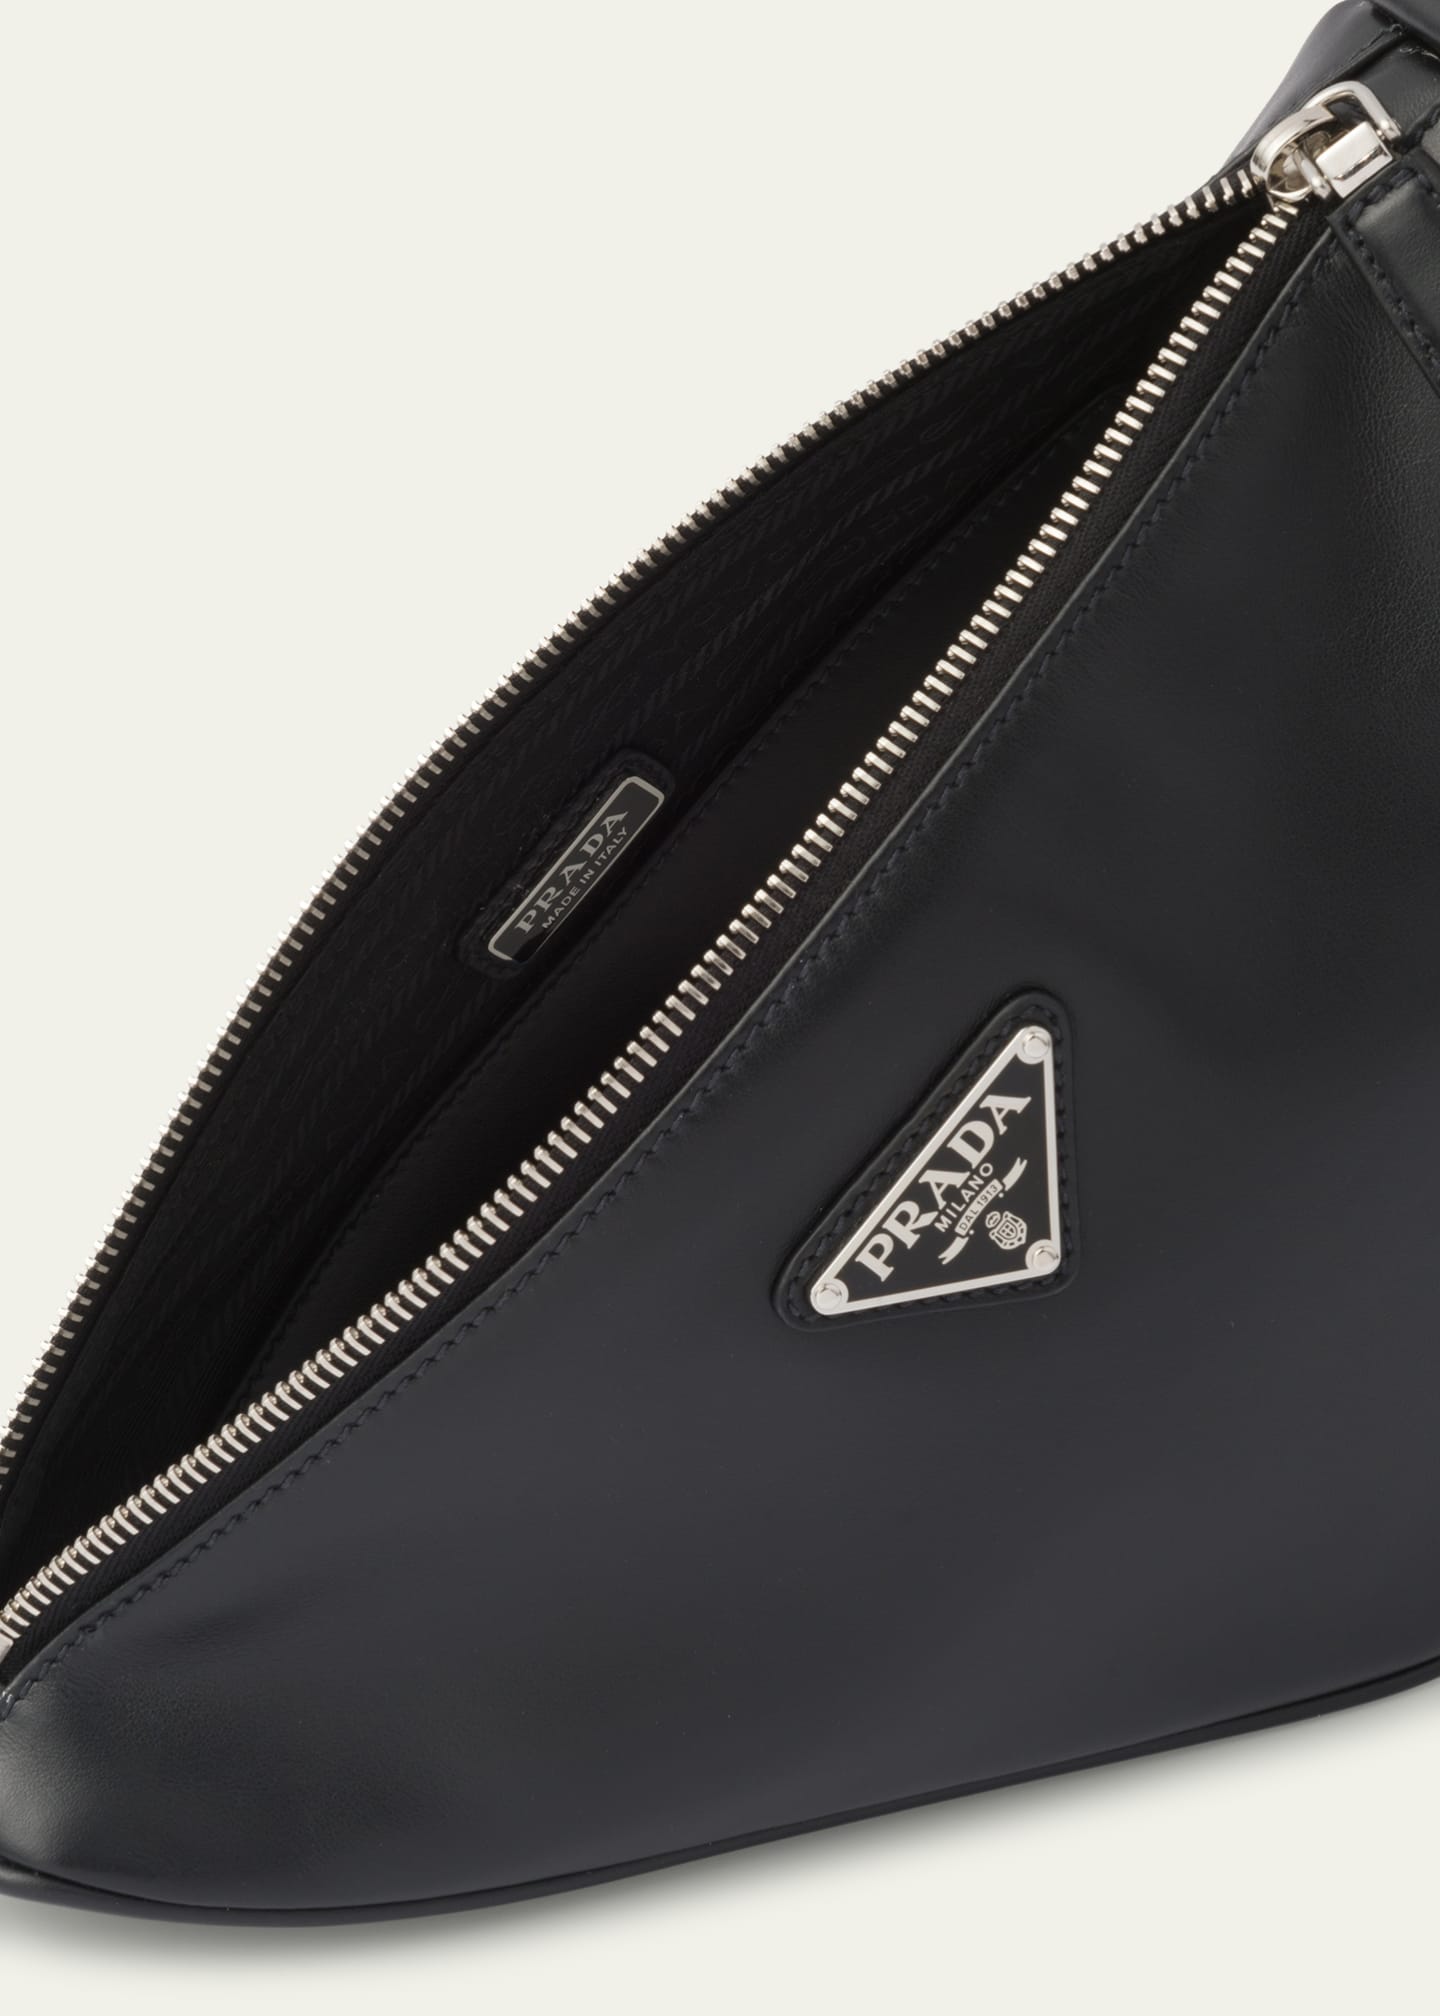 Prada Men's Leather Triangle Logo Sling Crossbody Bag - Bergdorf Goodman